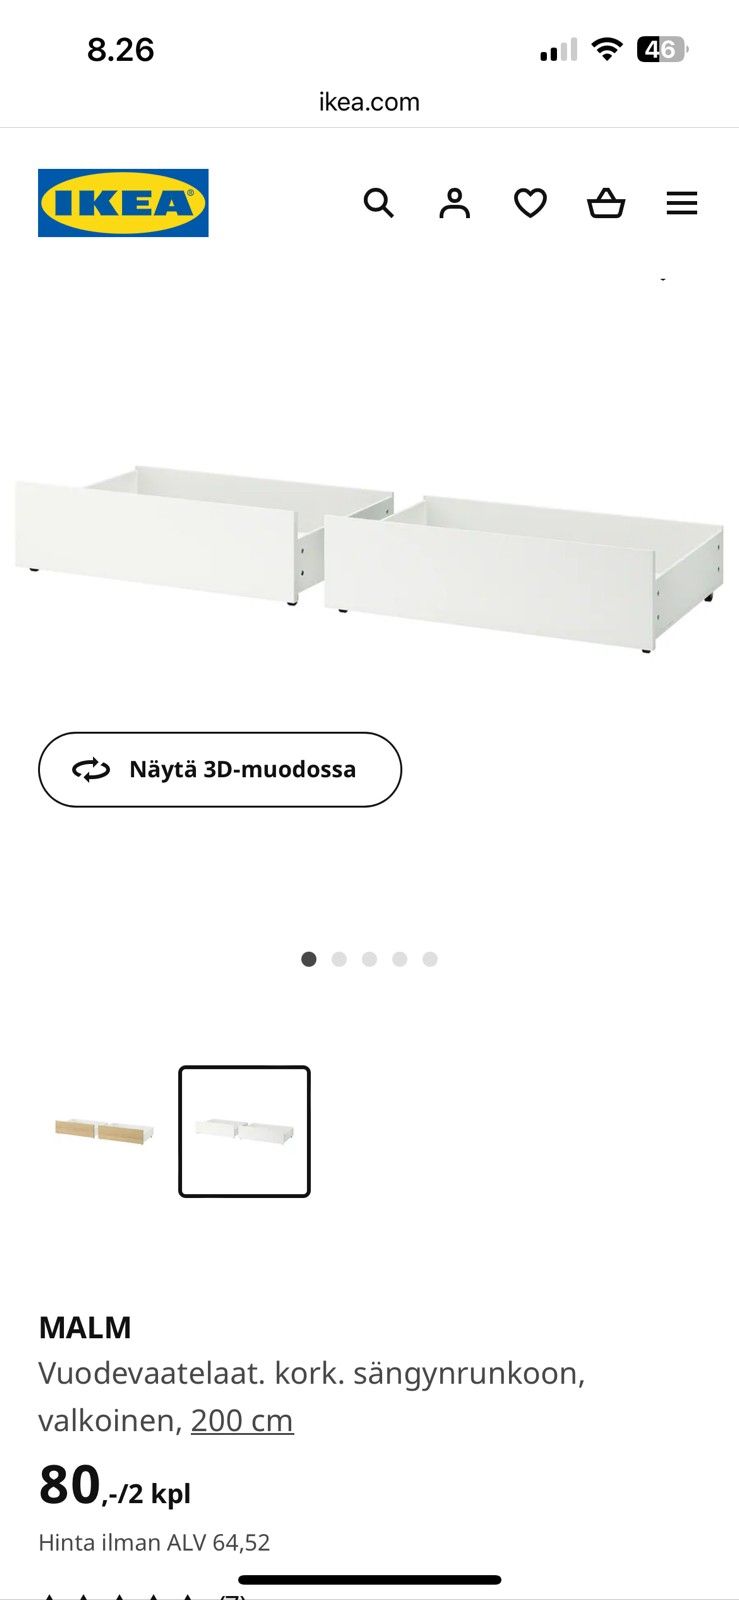 Ikea Malm vuodevaatelaatikko